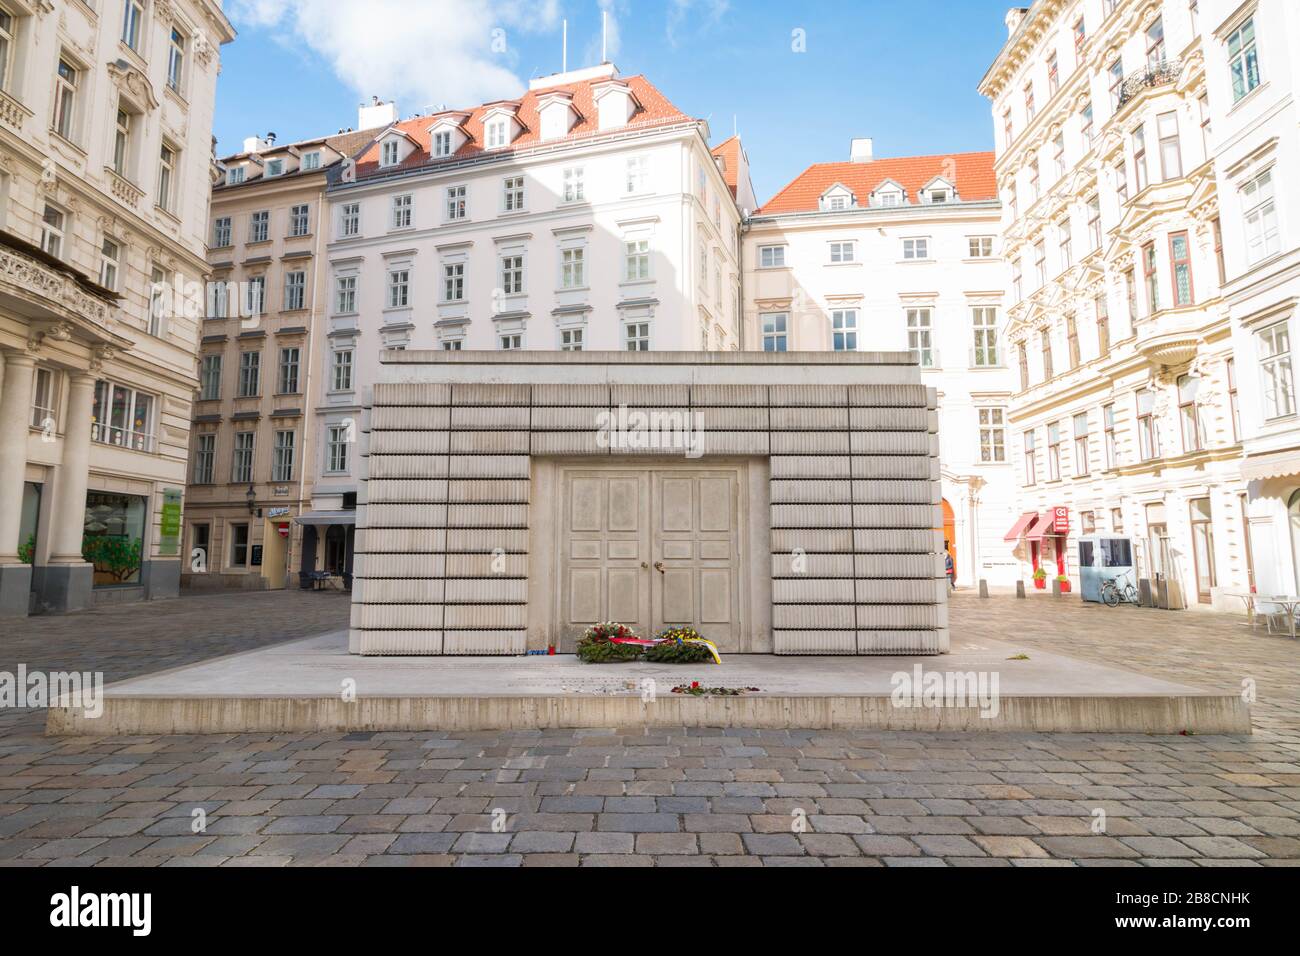 Wien, Österreich - 23. Februar 2020: Holocaust-Denkmal am Judenplatz (Namenlose Bibliothek) am Judenplatz. Stockfoto